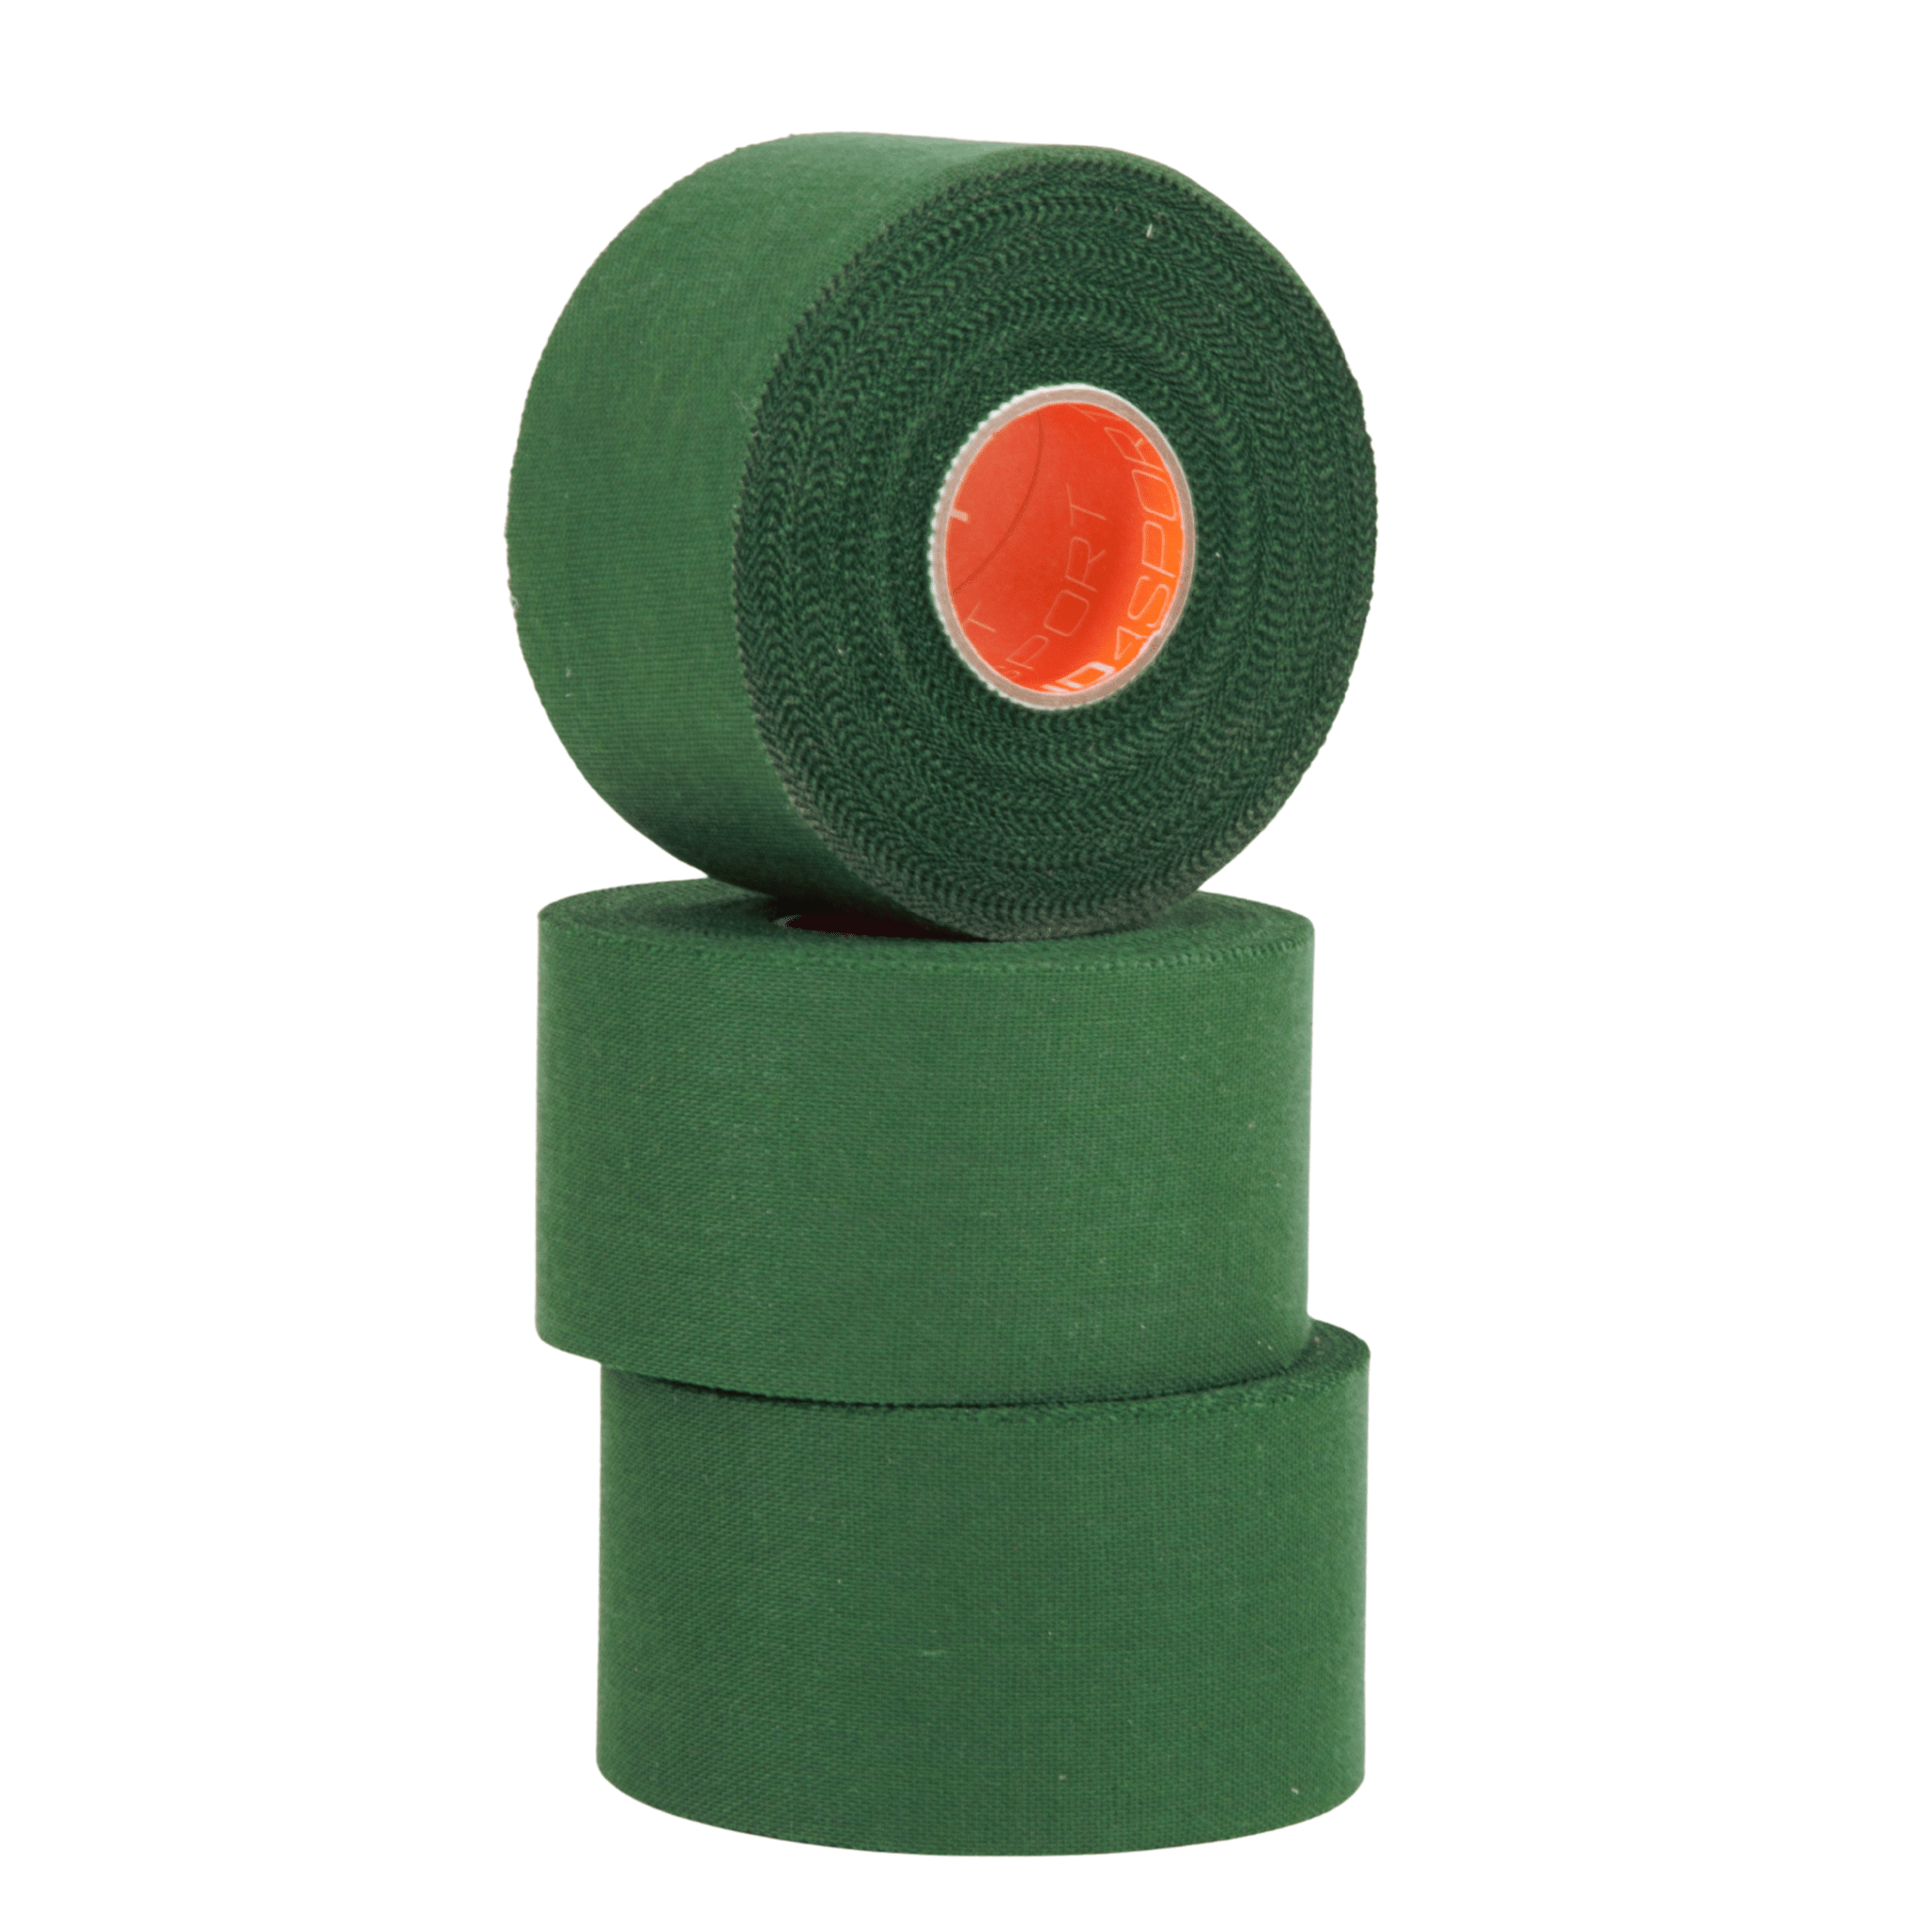 Green cloth grip tape